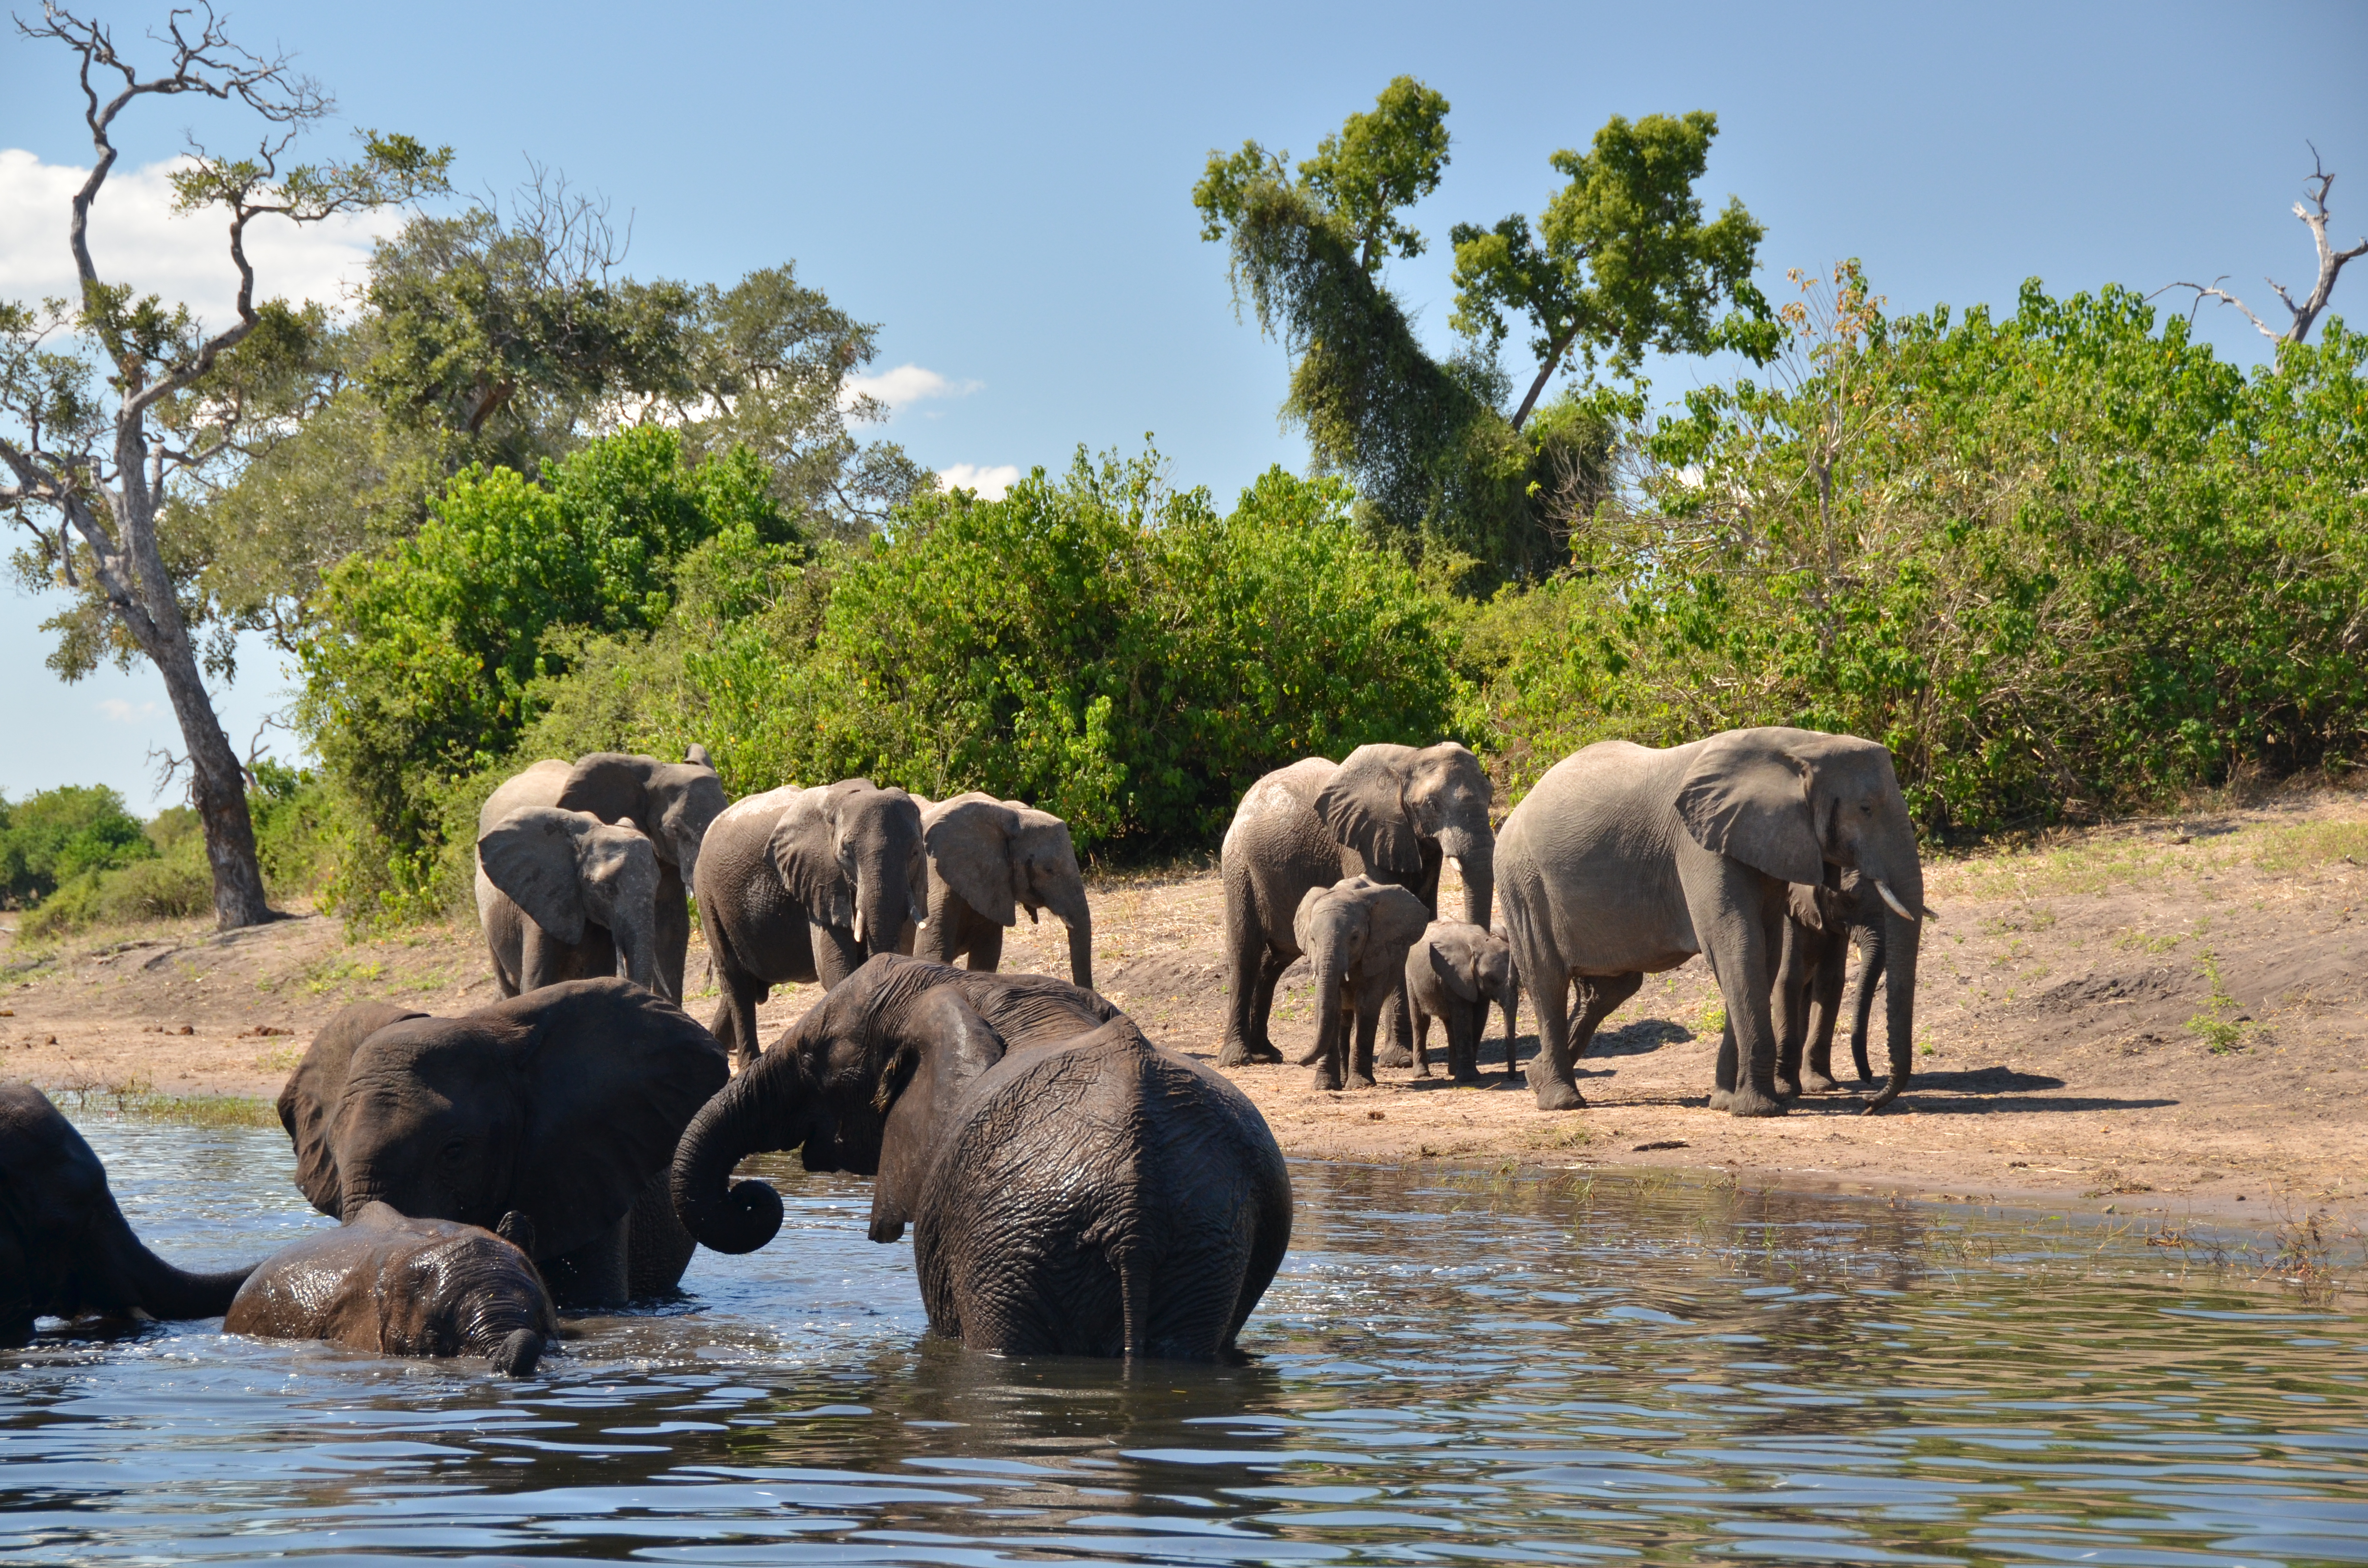 Elephant river. Национальный парк Чобе Ботсвана. Заповедник Каванго-Замбези. Национальный парк Чобе в Африке. Заповедник Чобе в Африке.